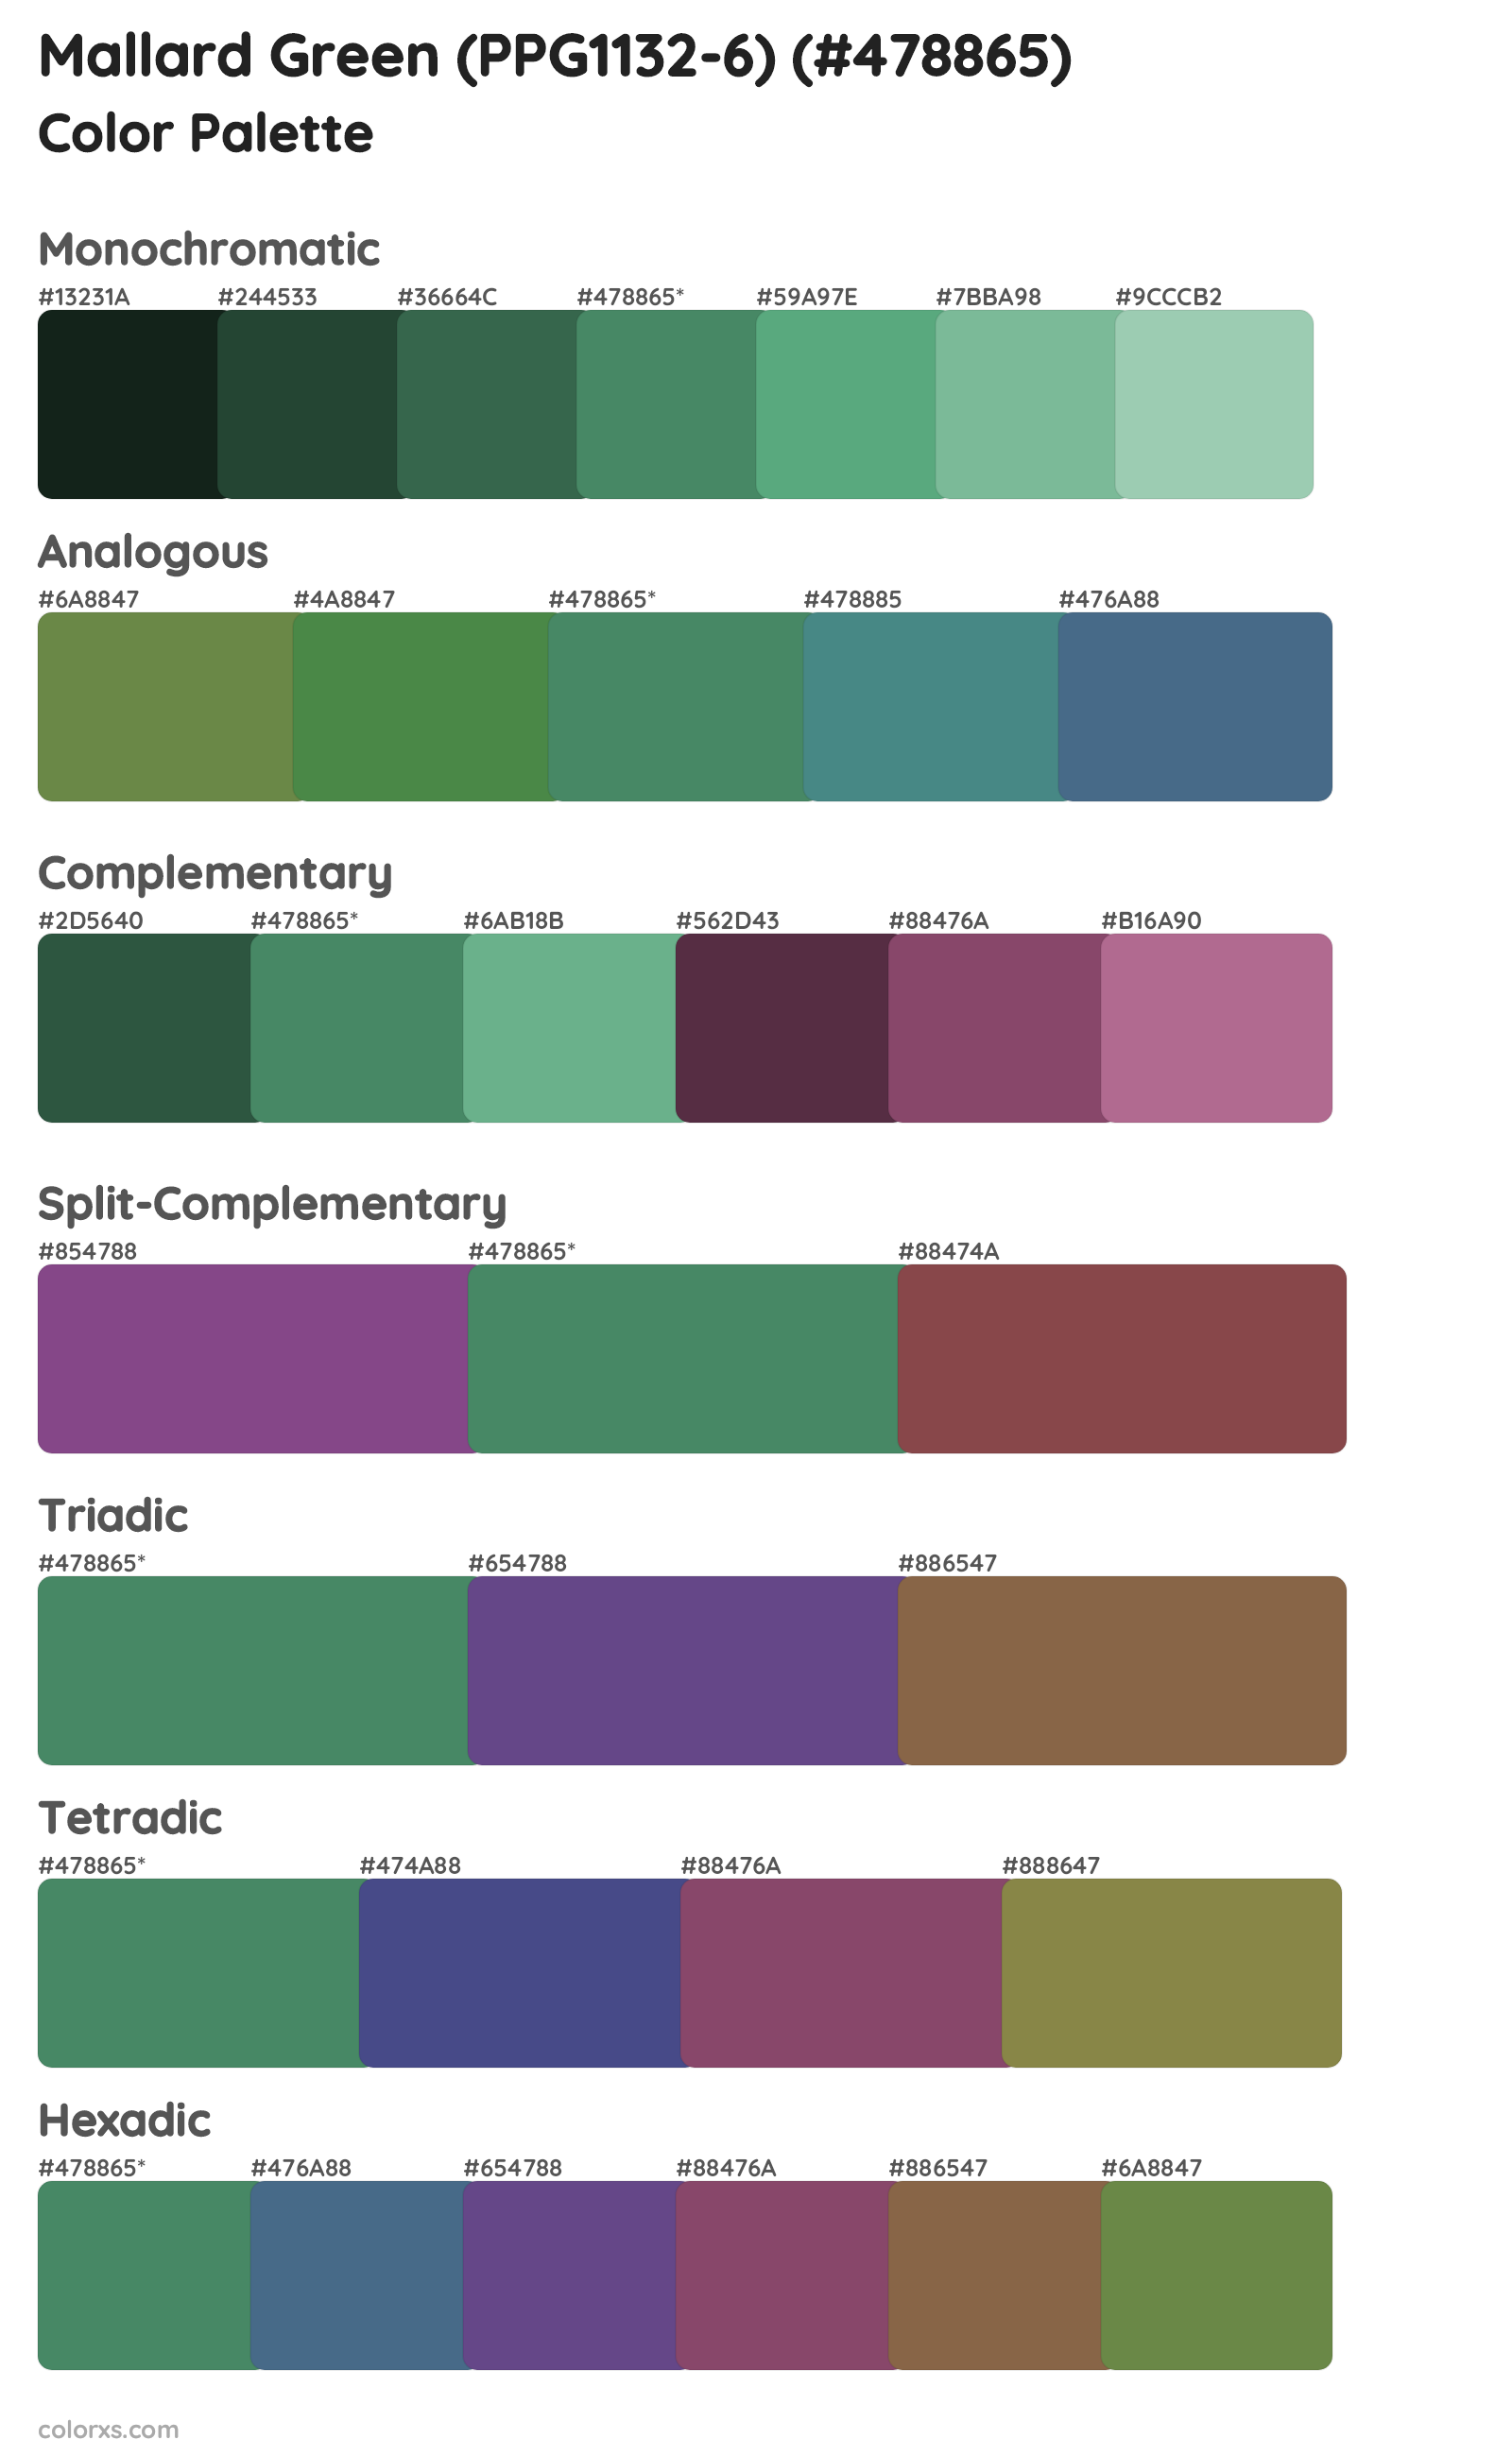 Mallard Green (PPG1132-6) Color Scheme Palettes